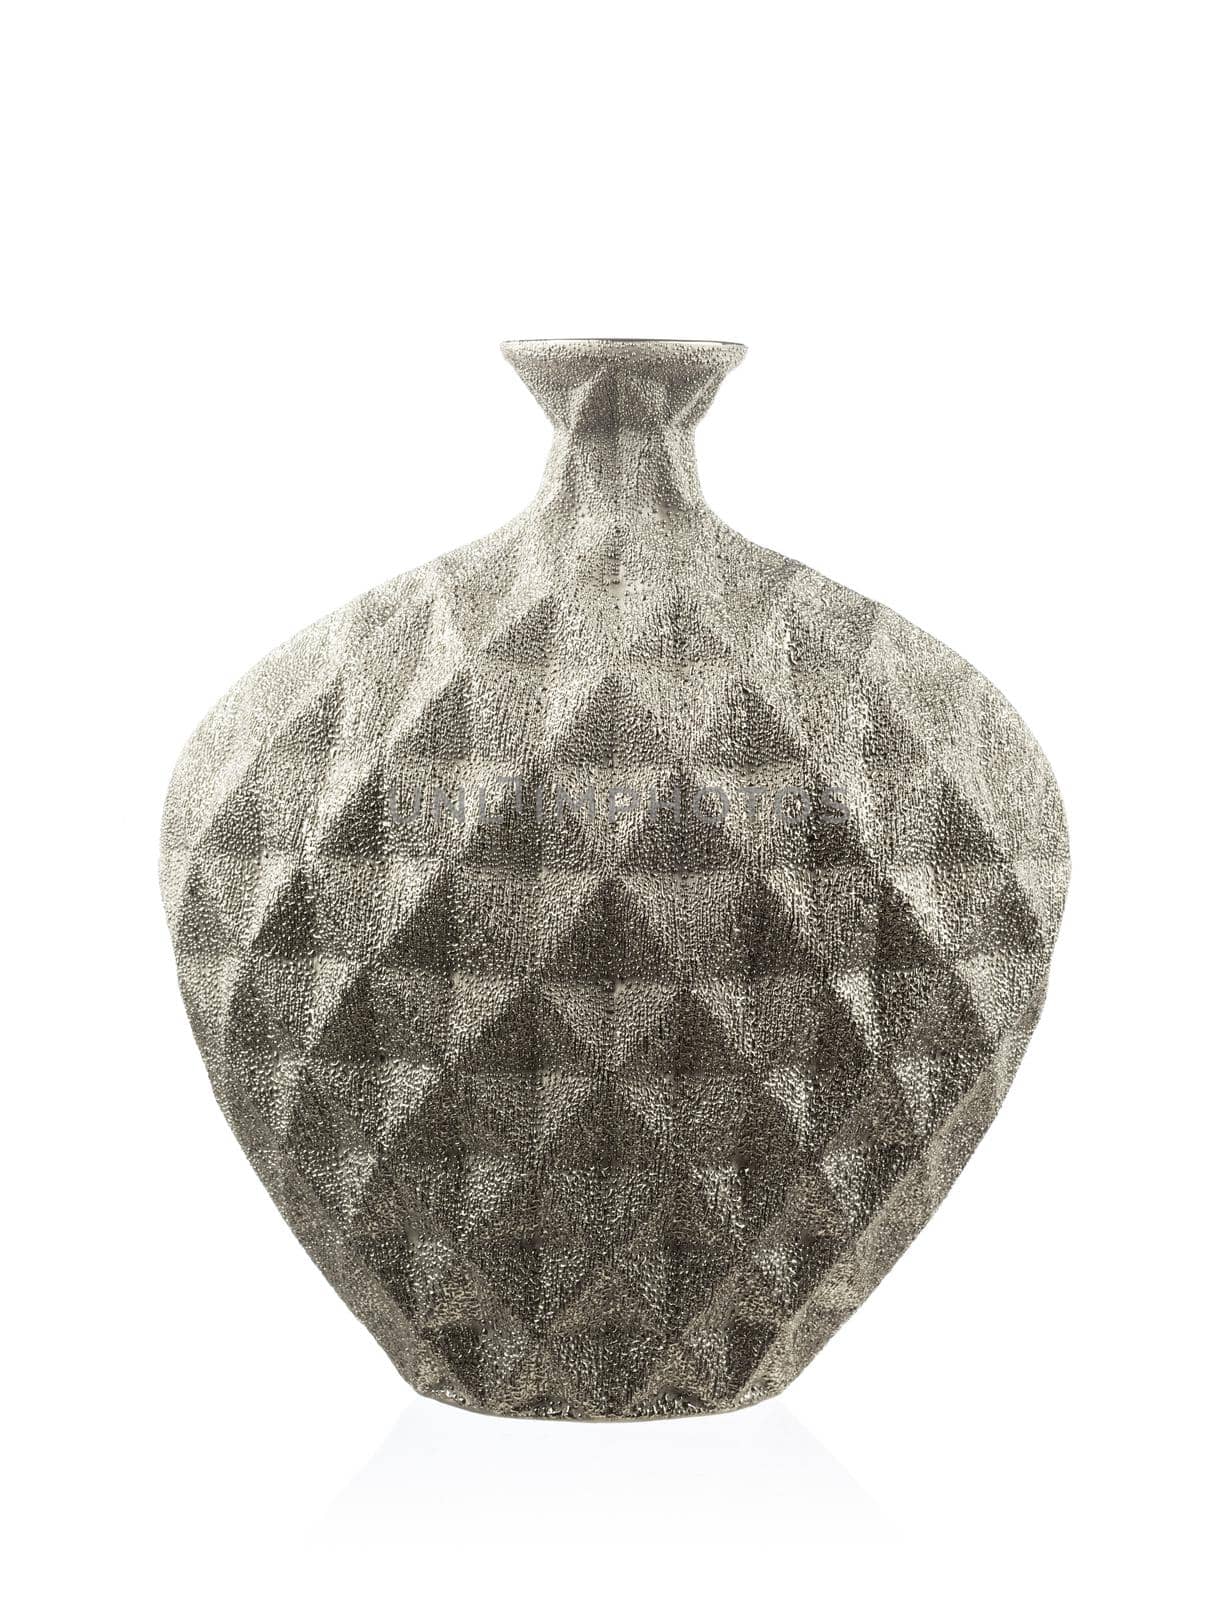 Modern chineese vase isolated on white